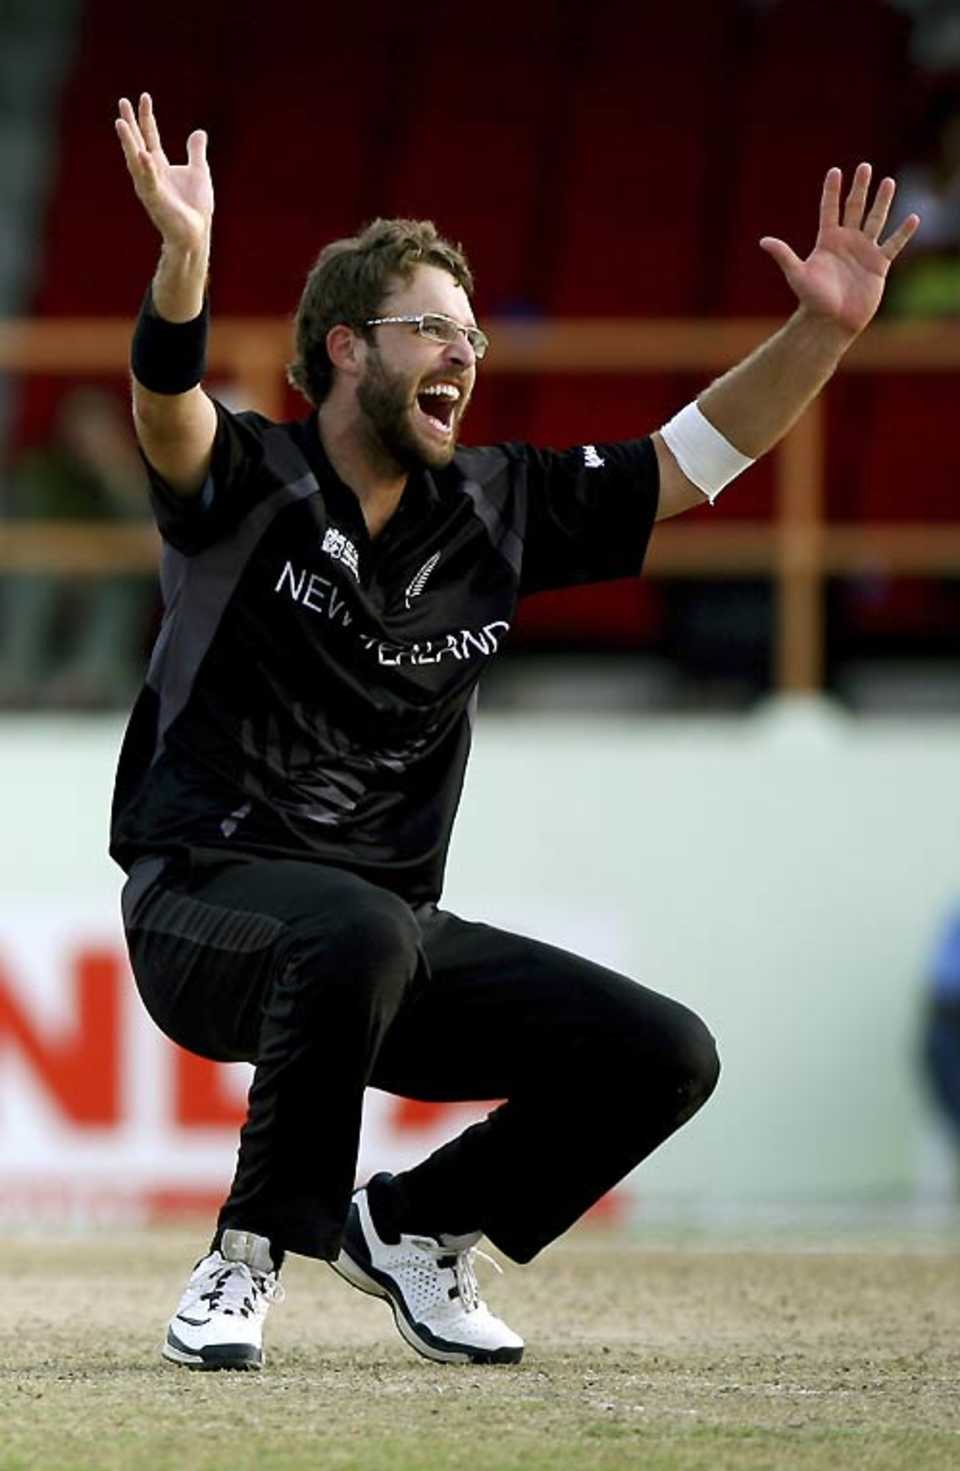 Daniel Vettori wins an appeal in his favour